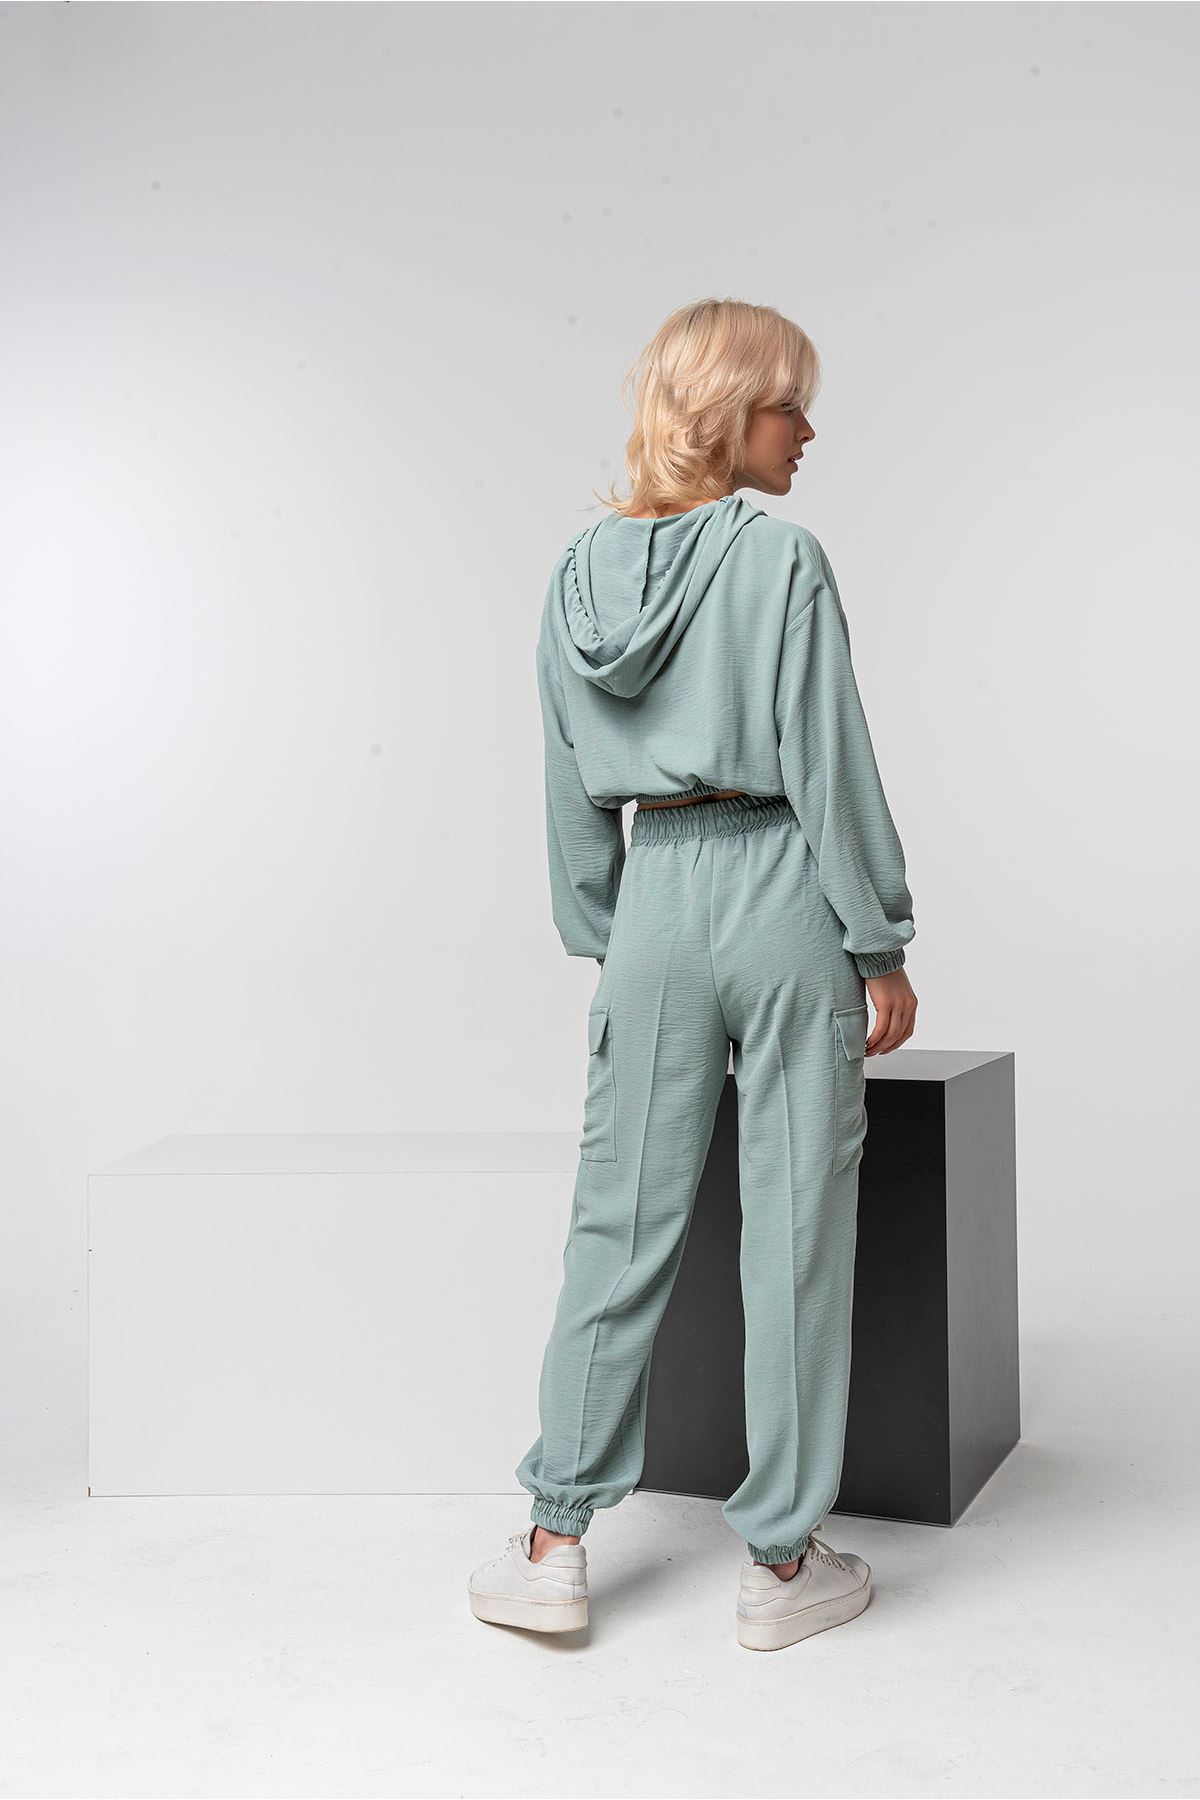 Aerobin Fabric Long Sleeve Hooded Oversize Blouse - Mint